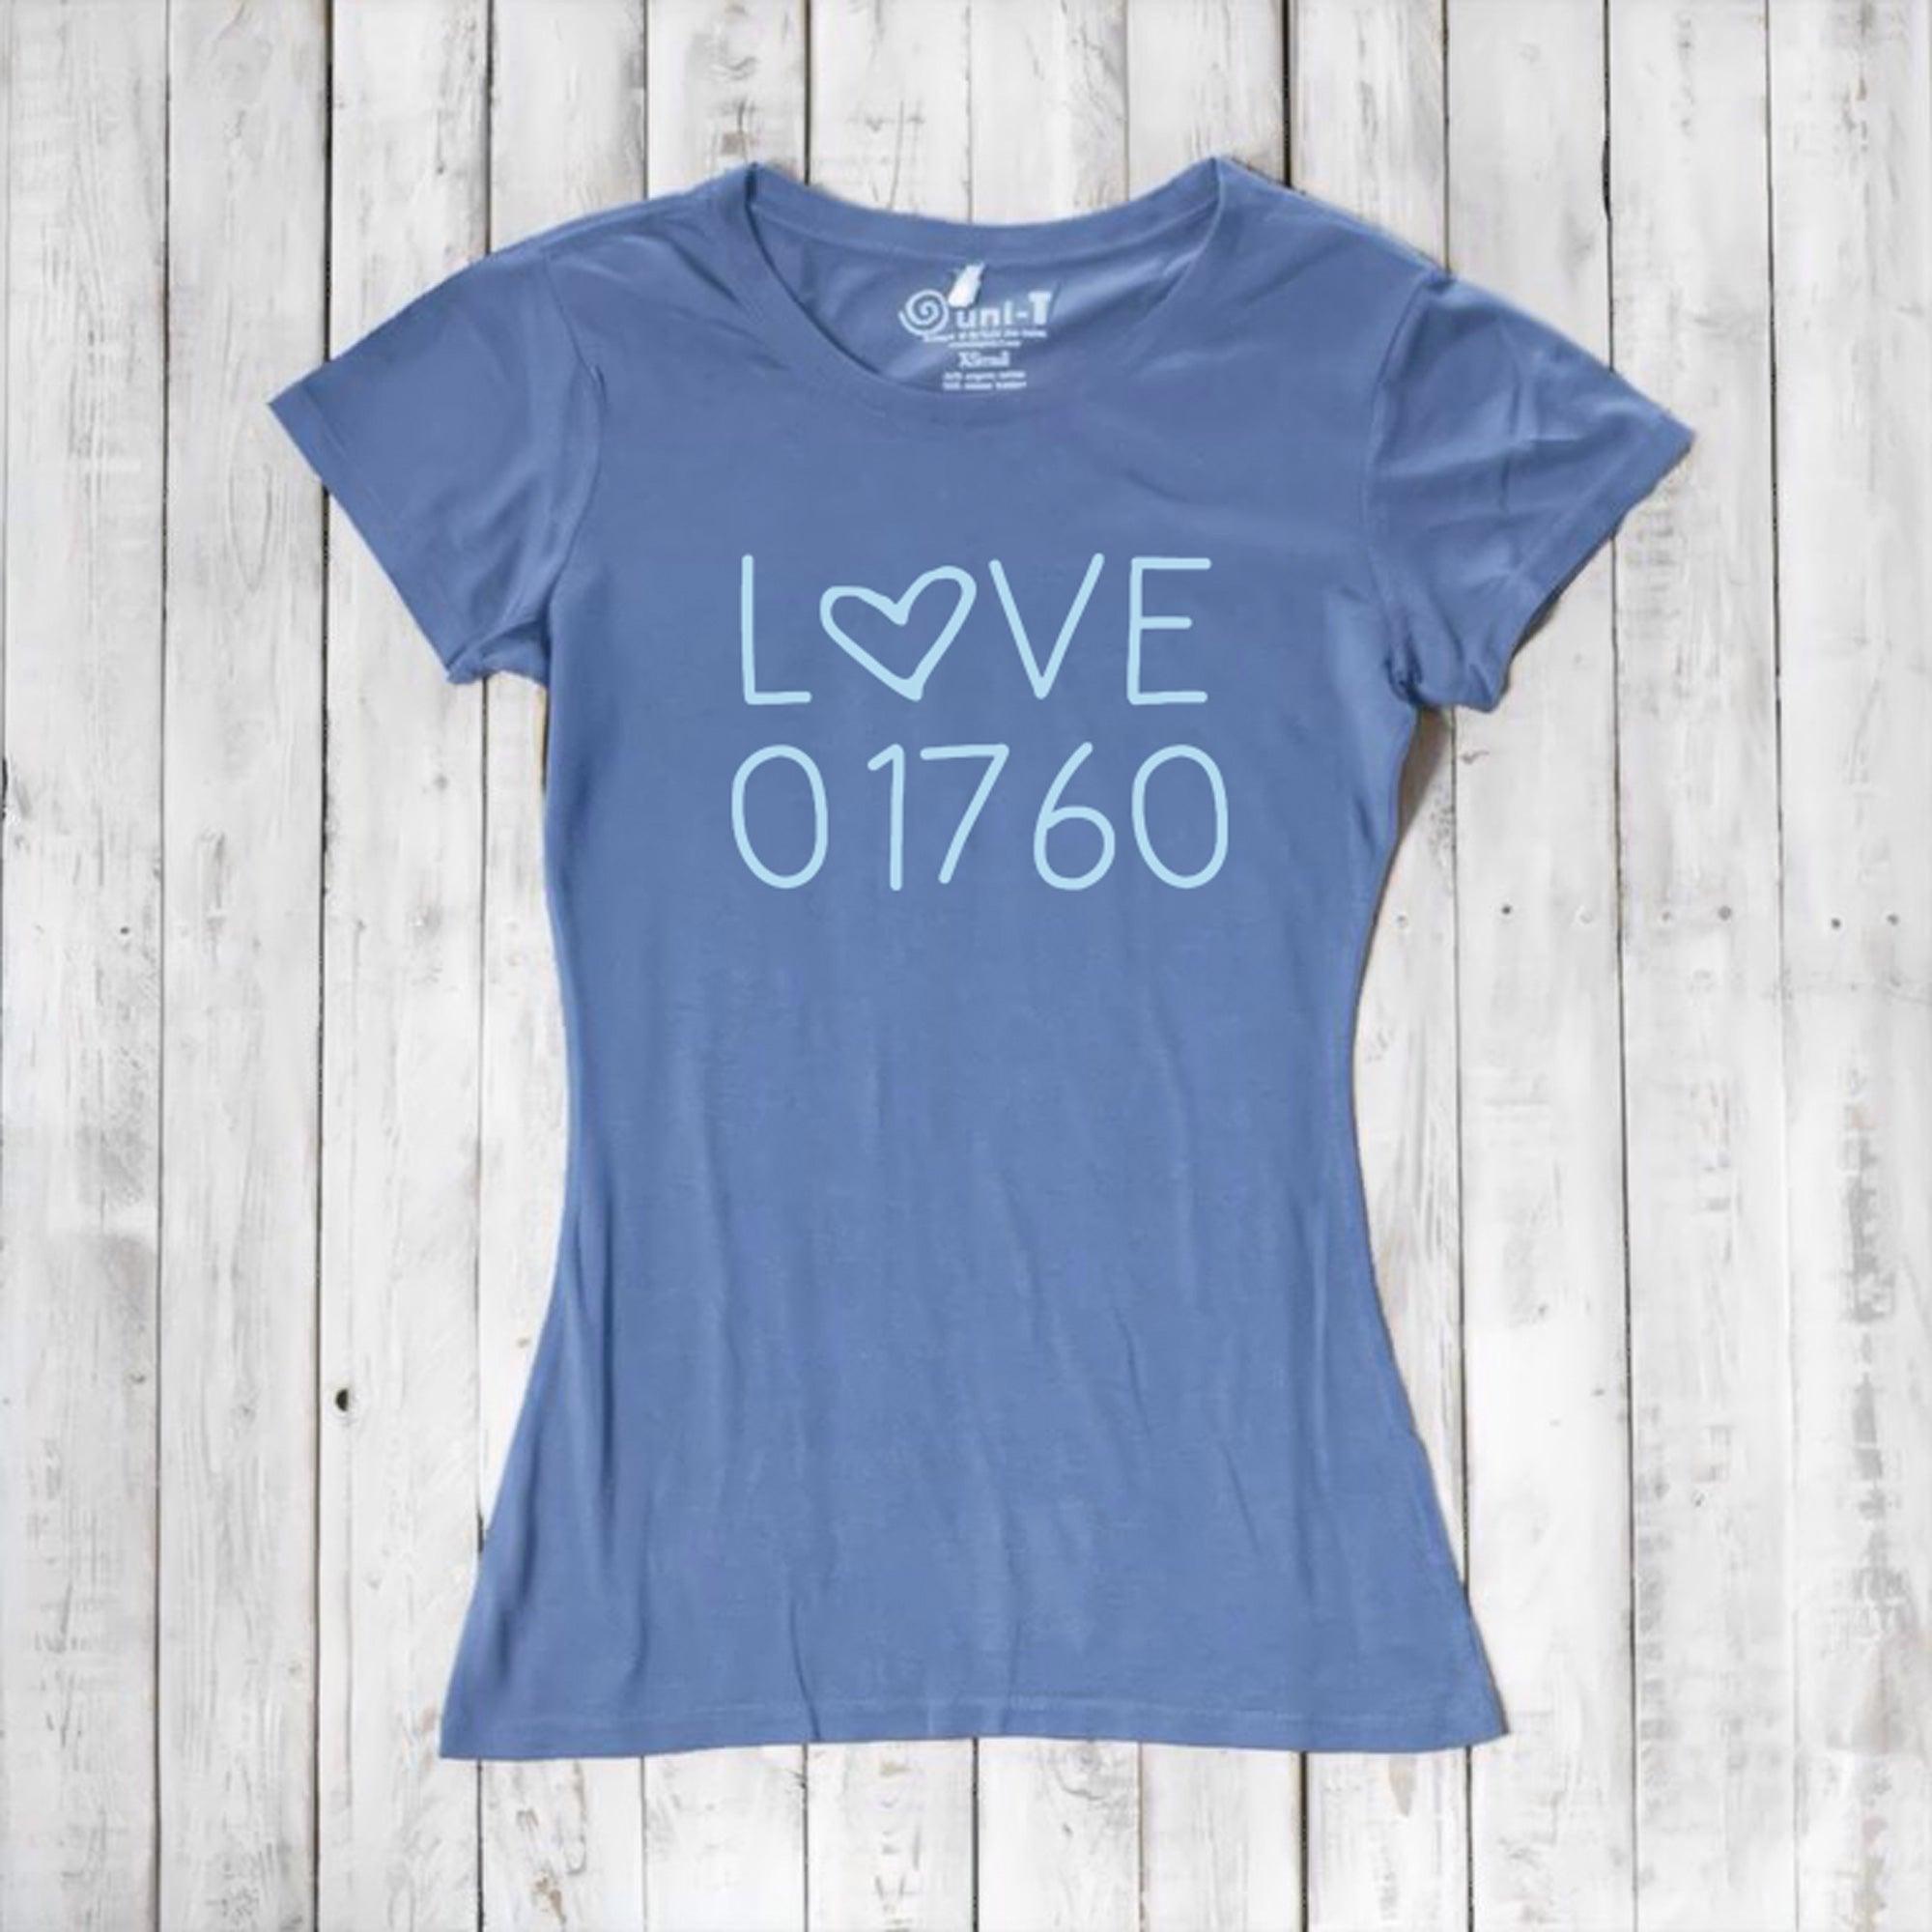 Love 01760 T-shirt for Women Uni-T WSS